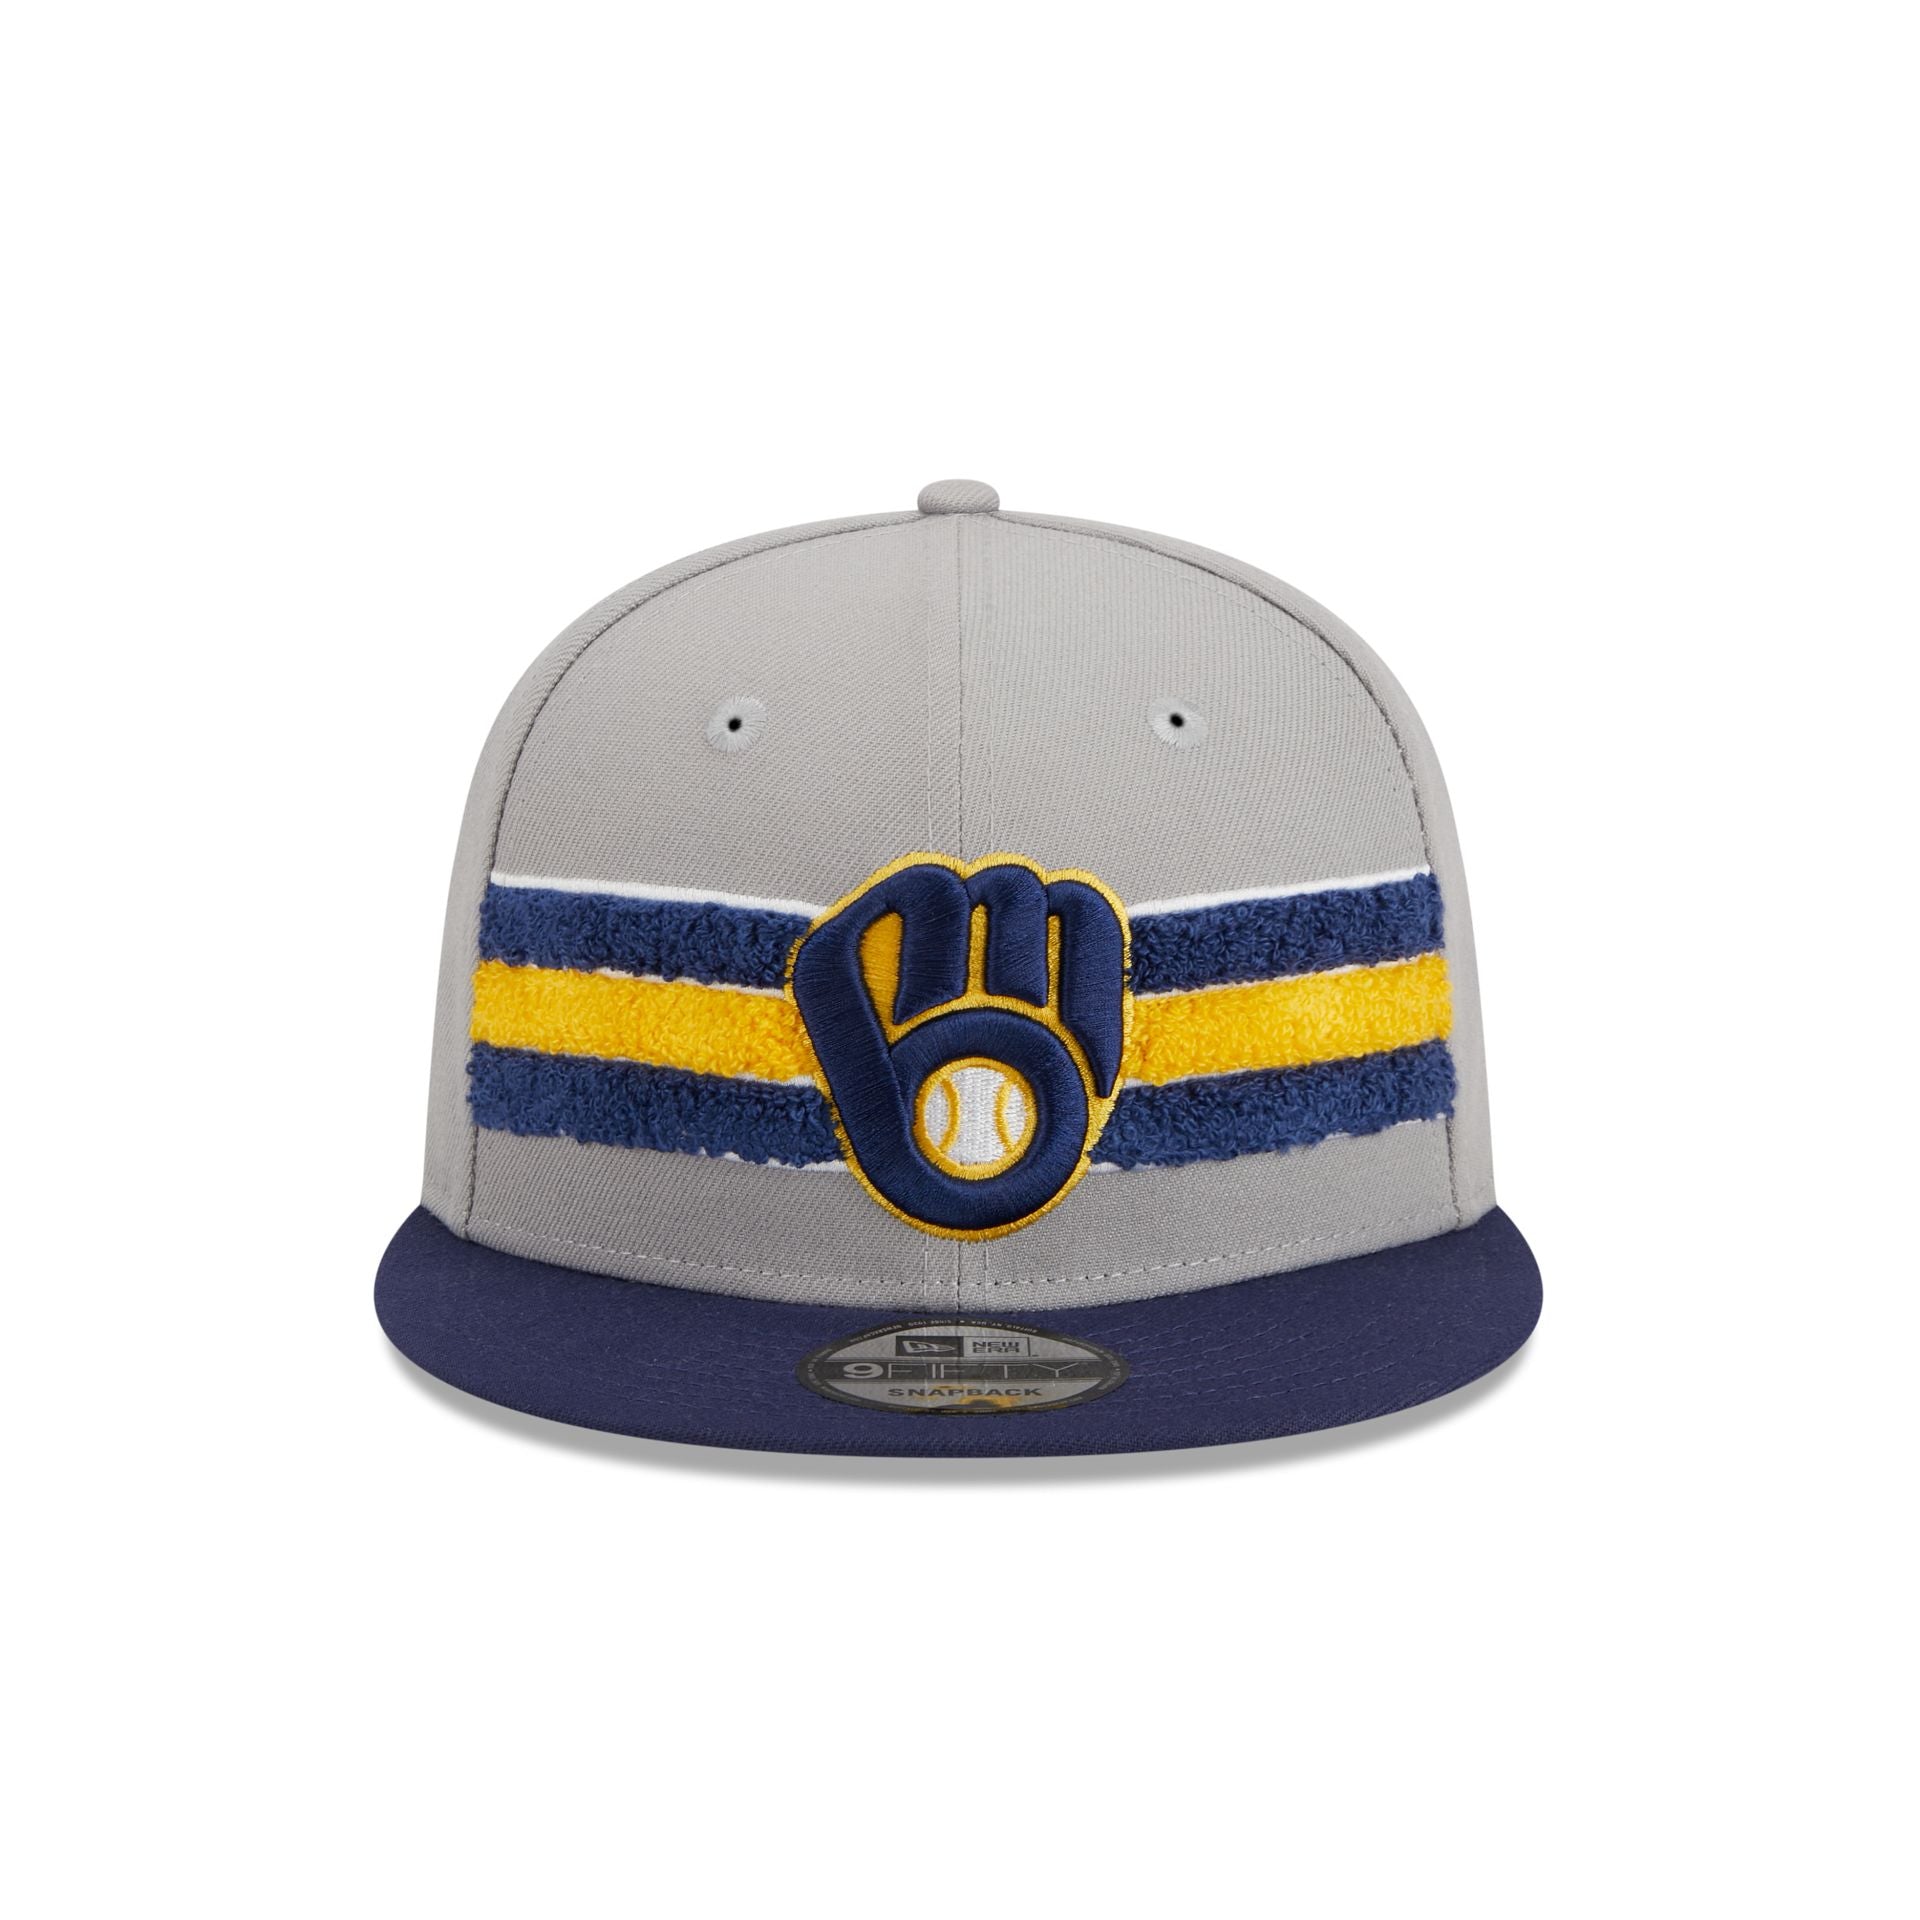 Milwaukee Brewers Lift Pass 9FIFTY Snapback Hat, Gray, MLB by New Era